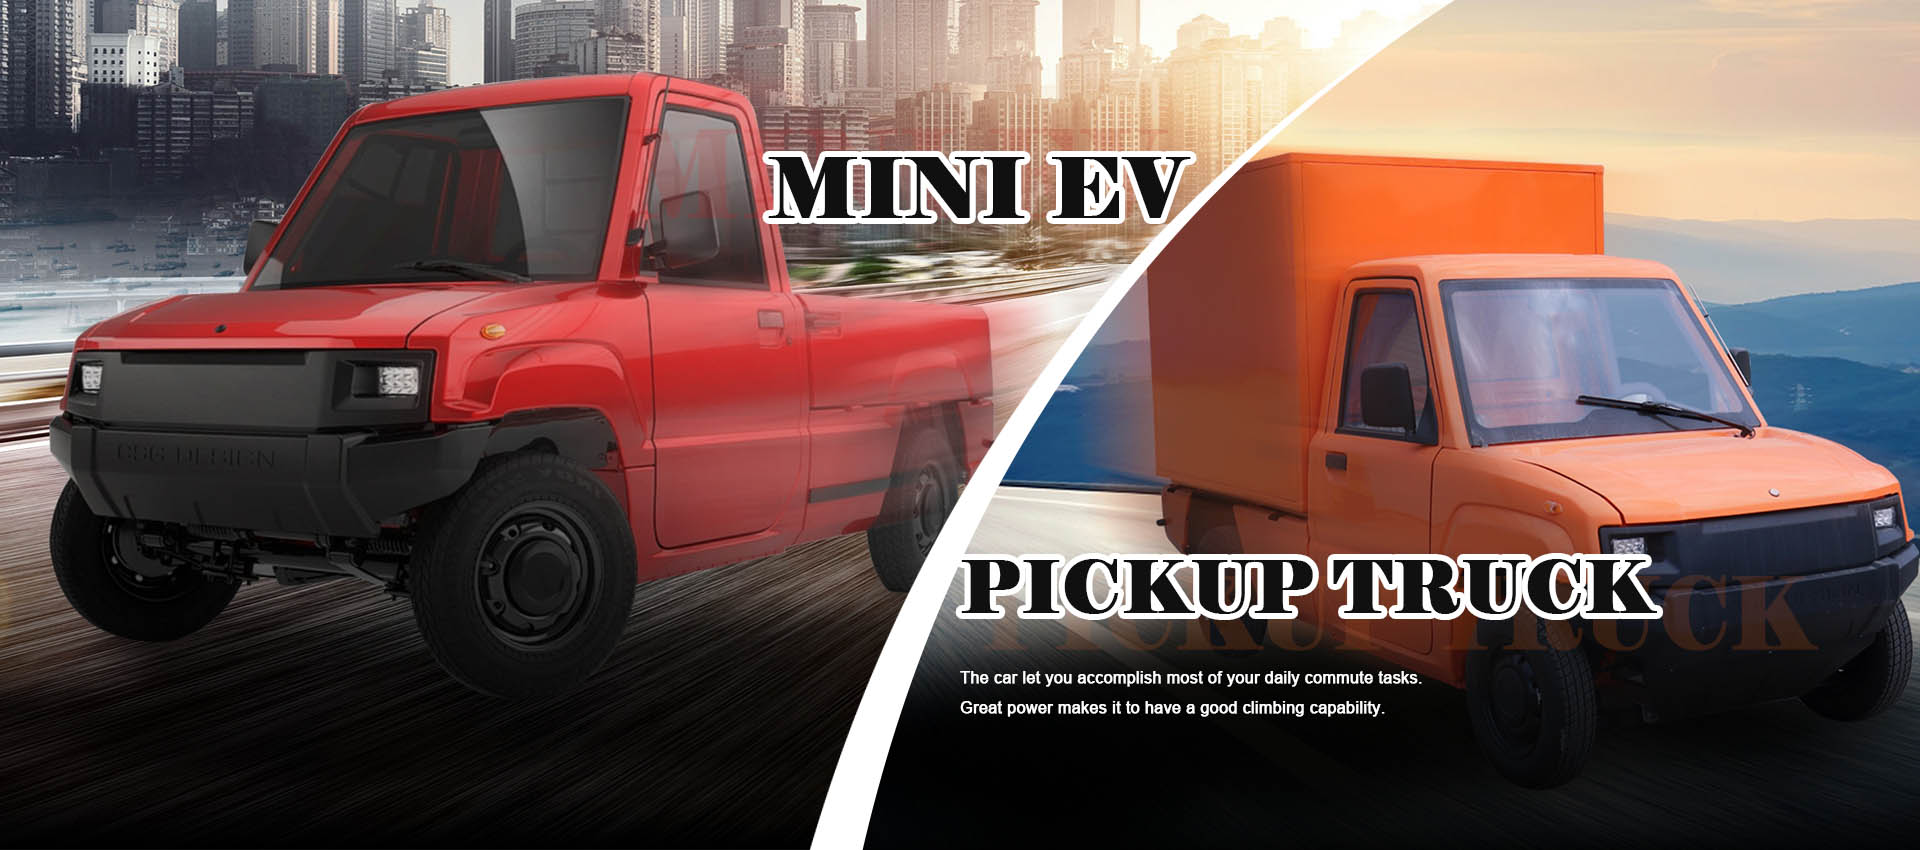 Mga Manufacturer ng Mini EV Pickup Truck